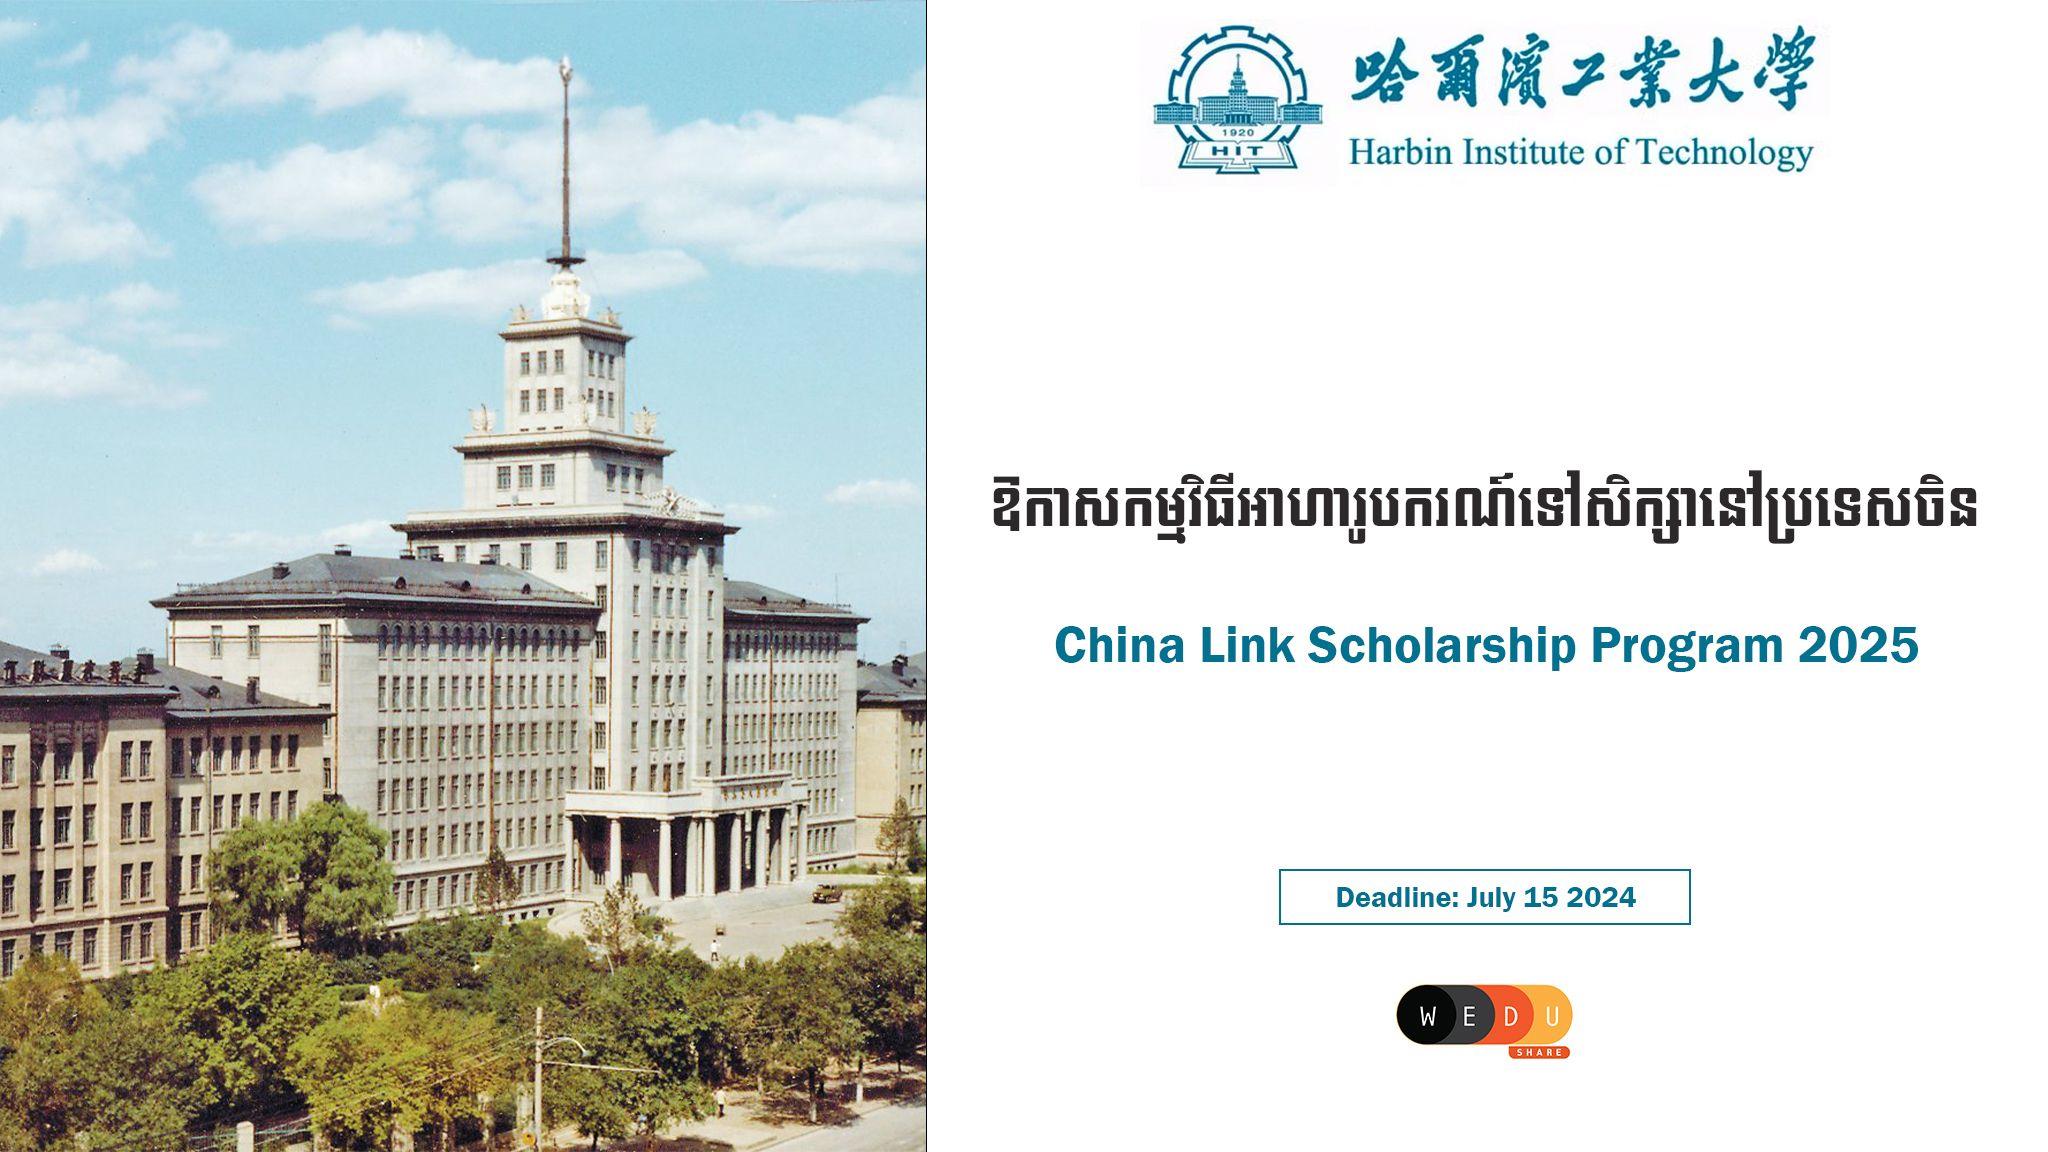 China Link Scholarship Program 2025 at HIT University